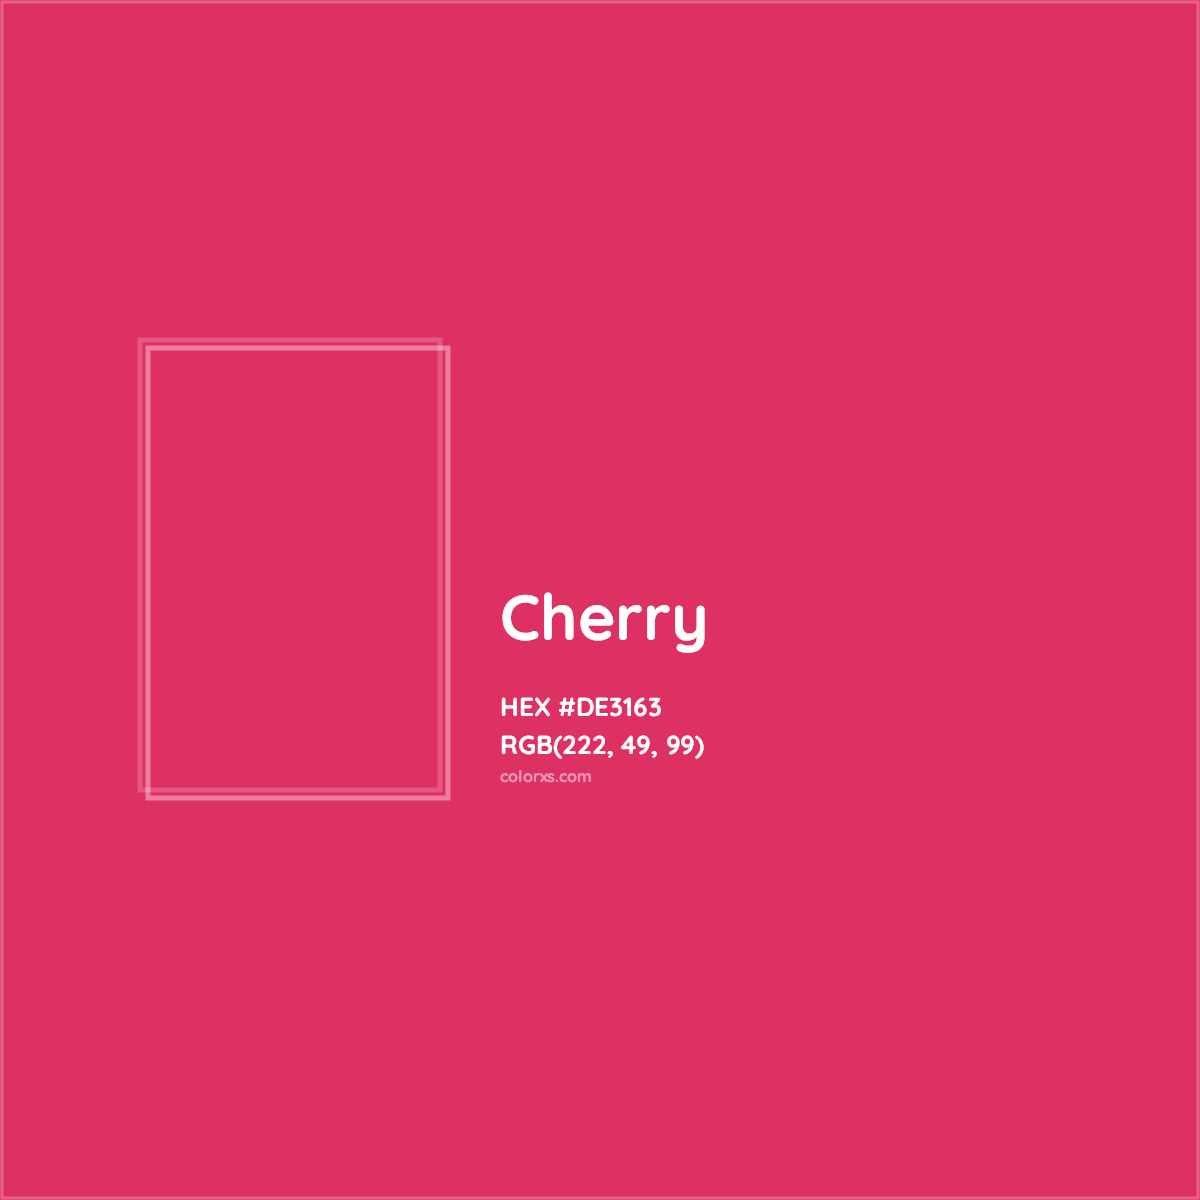 HEX #DE3163 Cherry Color - Color Code